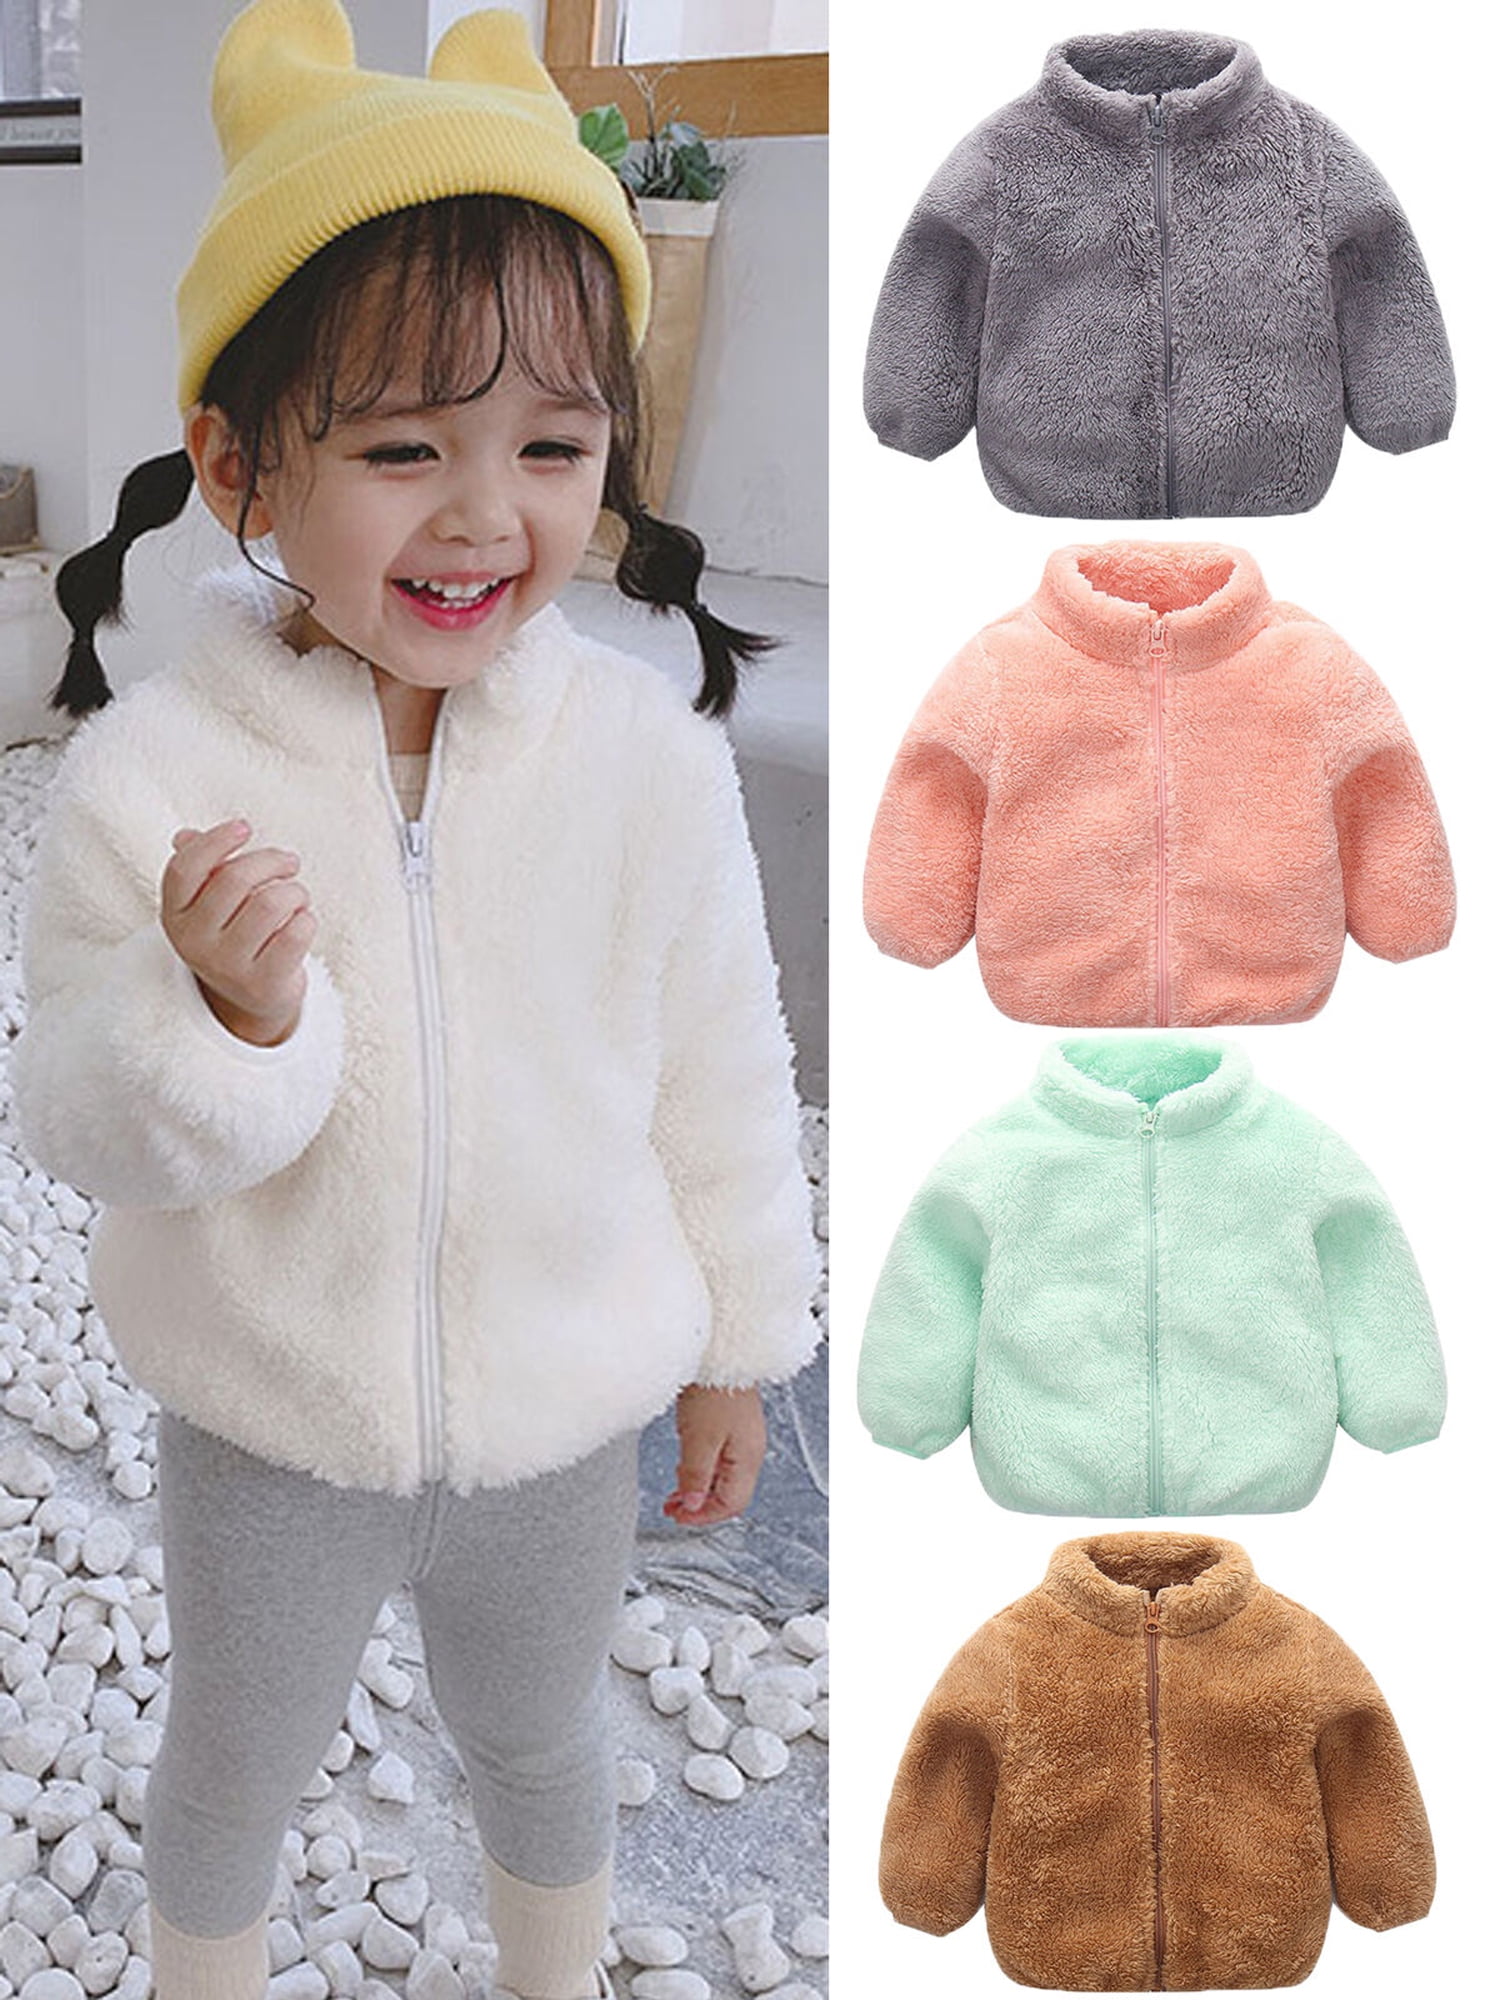 Girl Jacket Best Friend Coat For Kids Snowsuit Top Outerwear Clothing Gray 